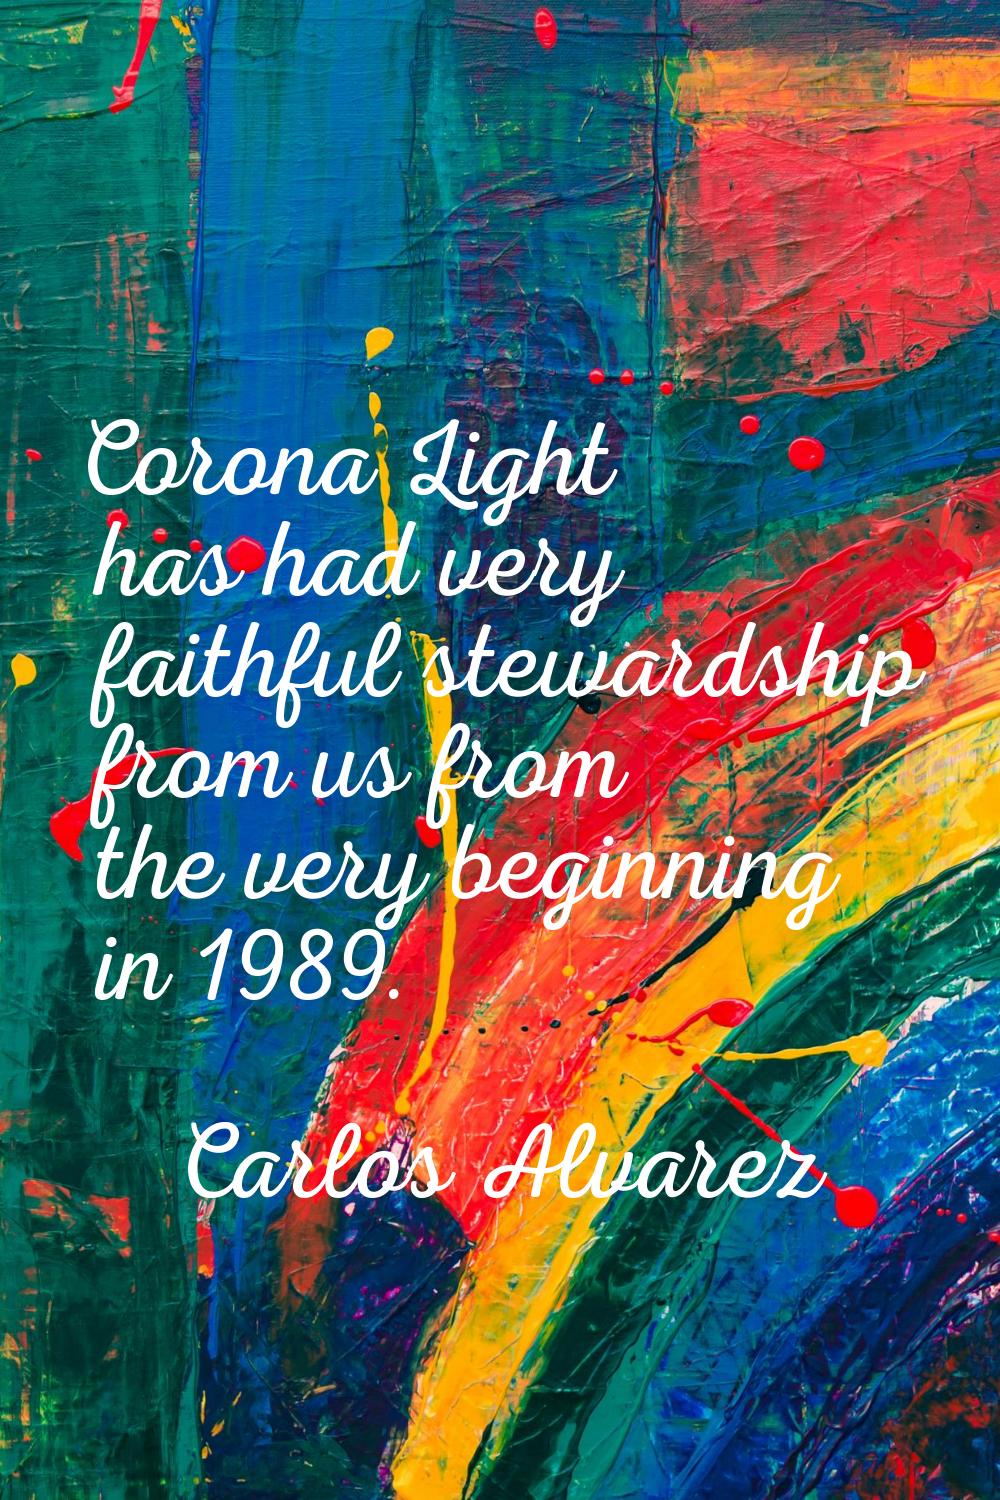 Corona Light has had very faithful stewardship from us from the very beginning in 1989.